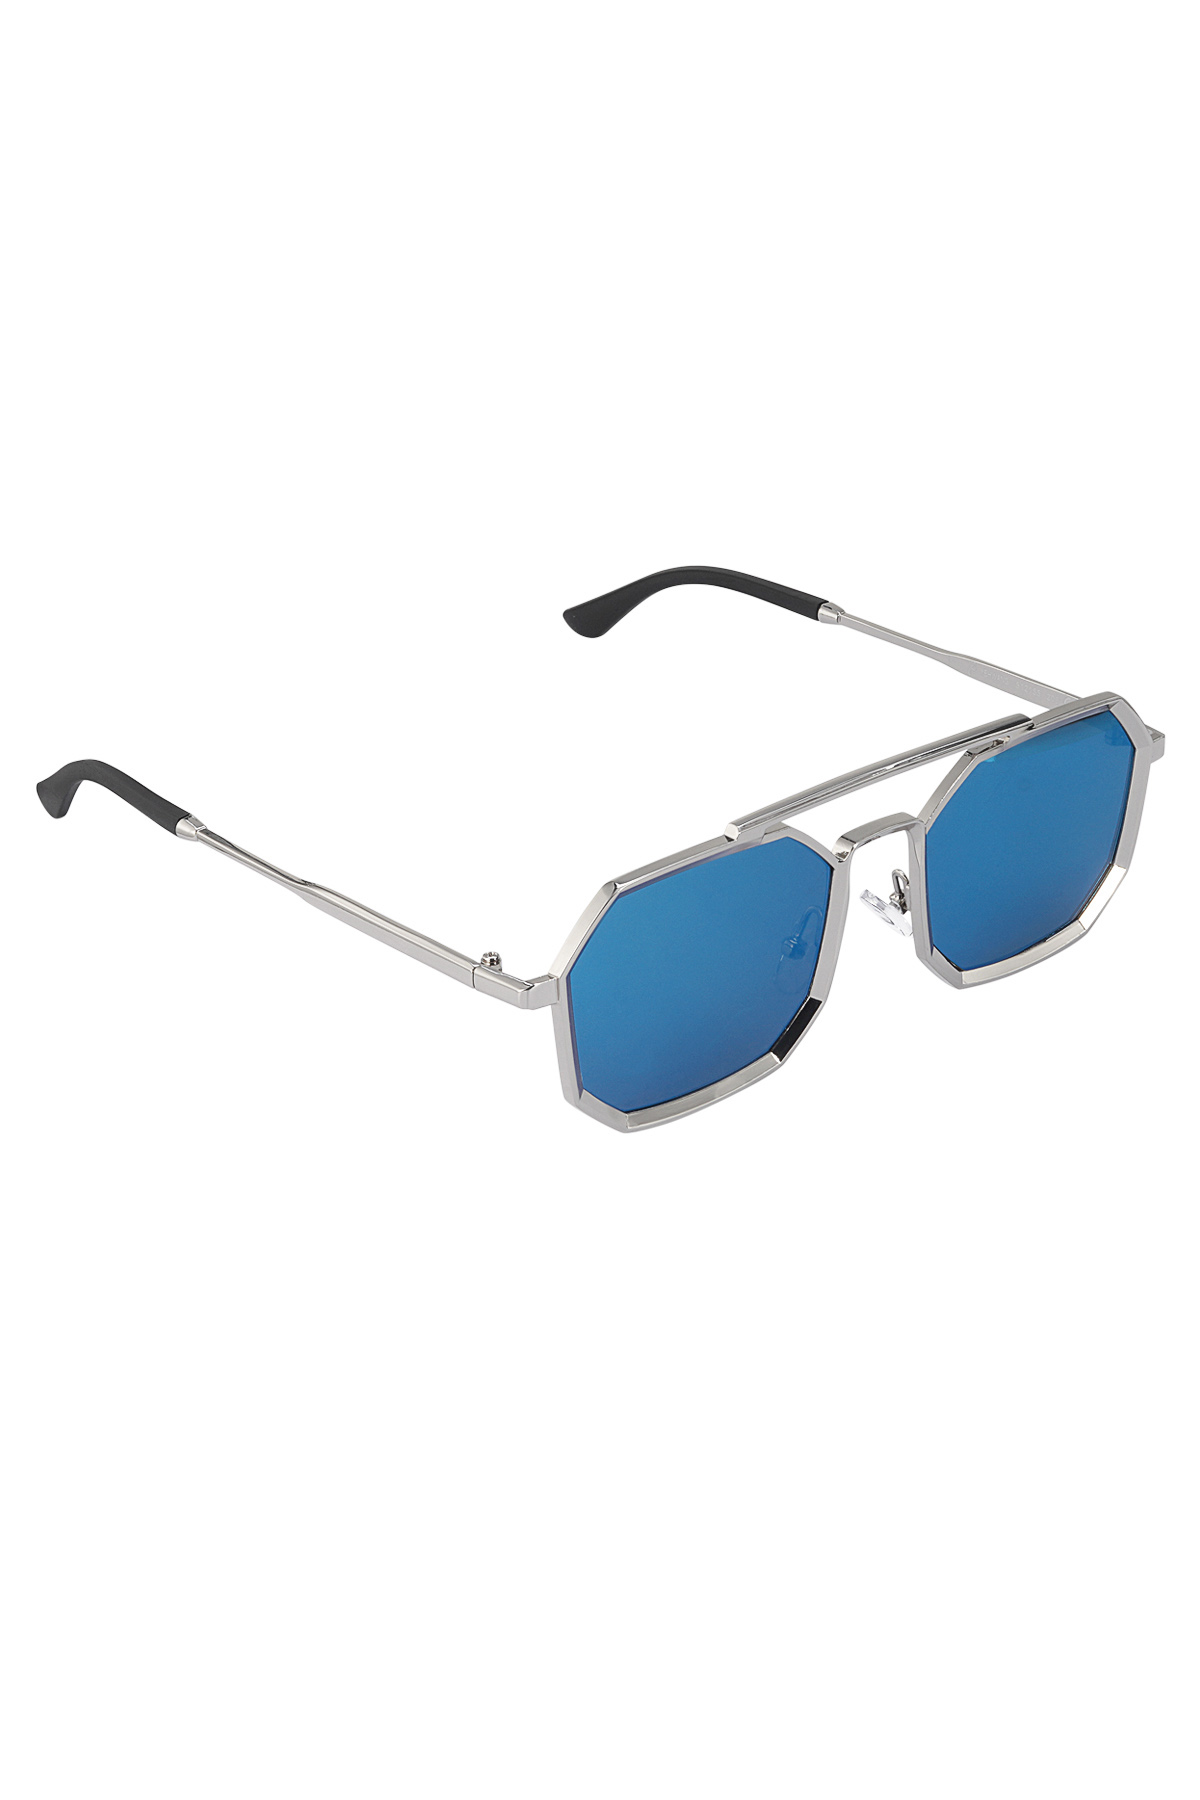 Sonnenbrille LuminLens - Blau Silber h5 